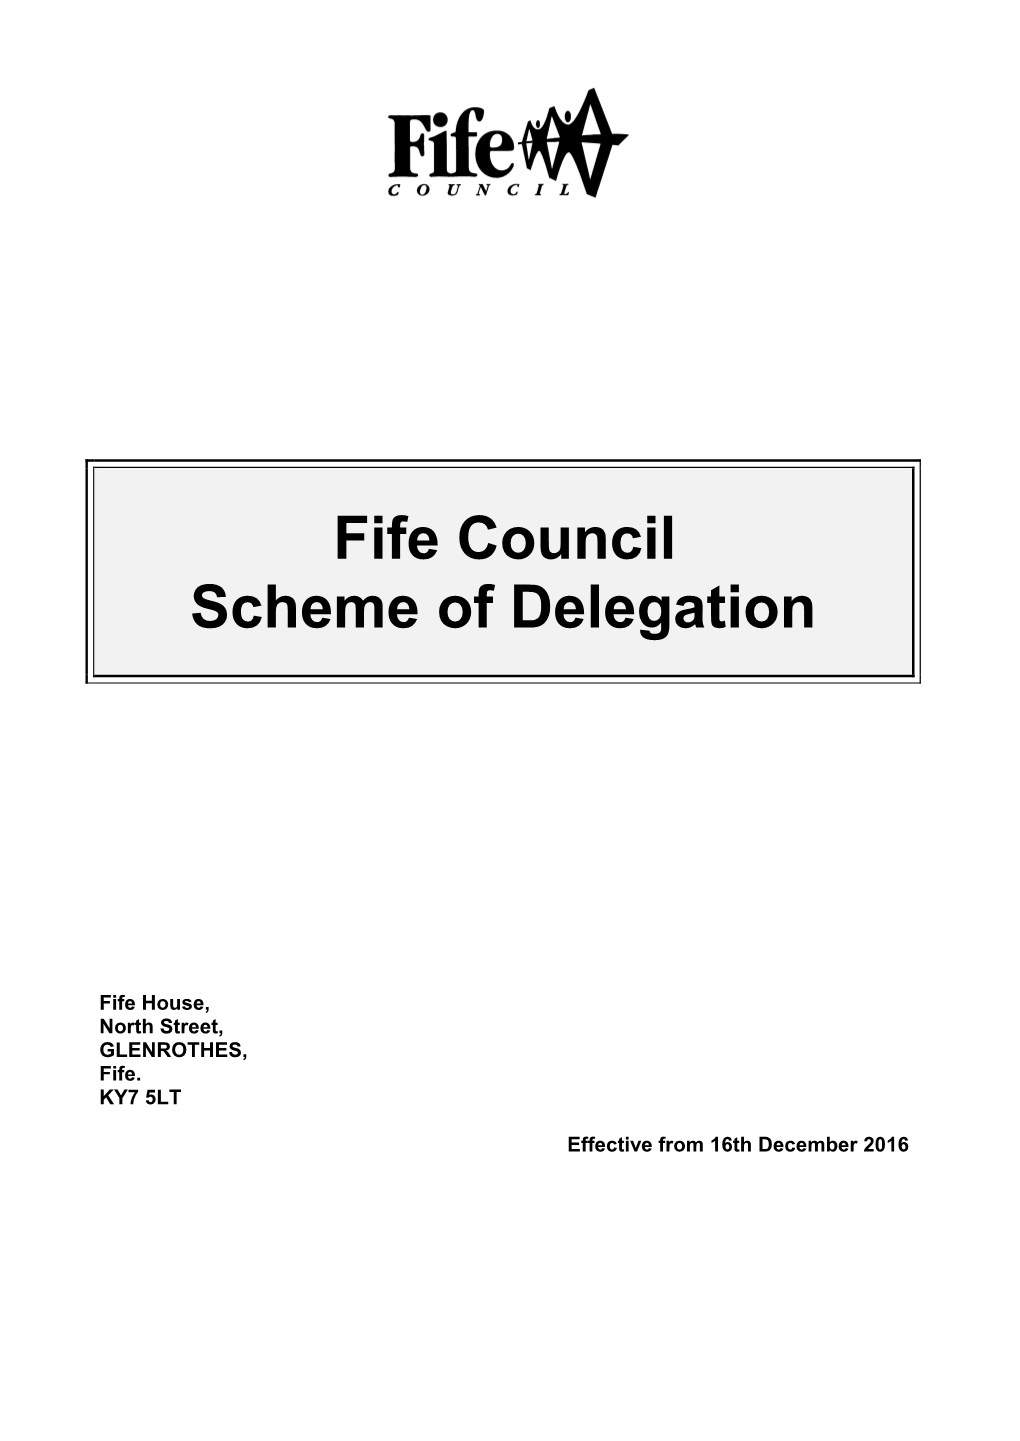 Scheme of Delegation